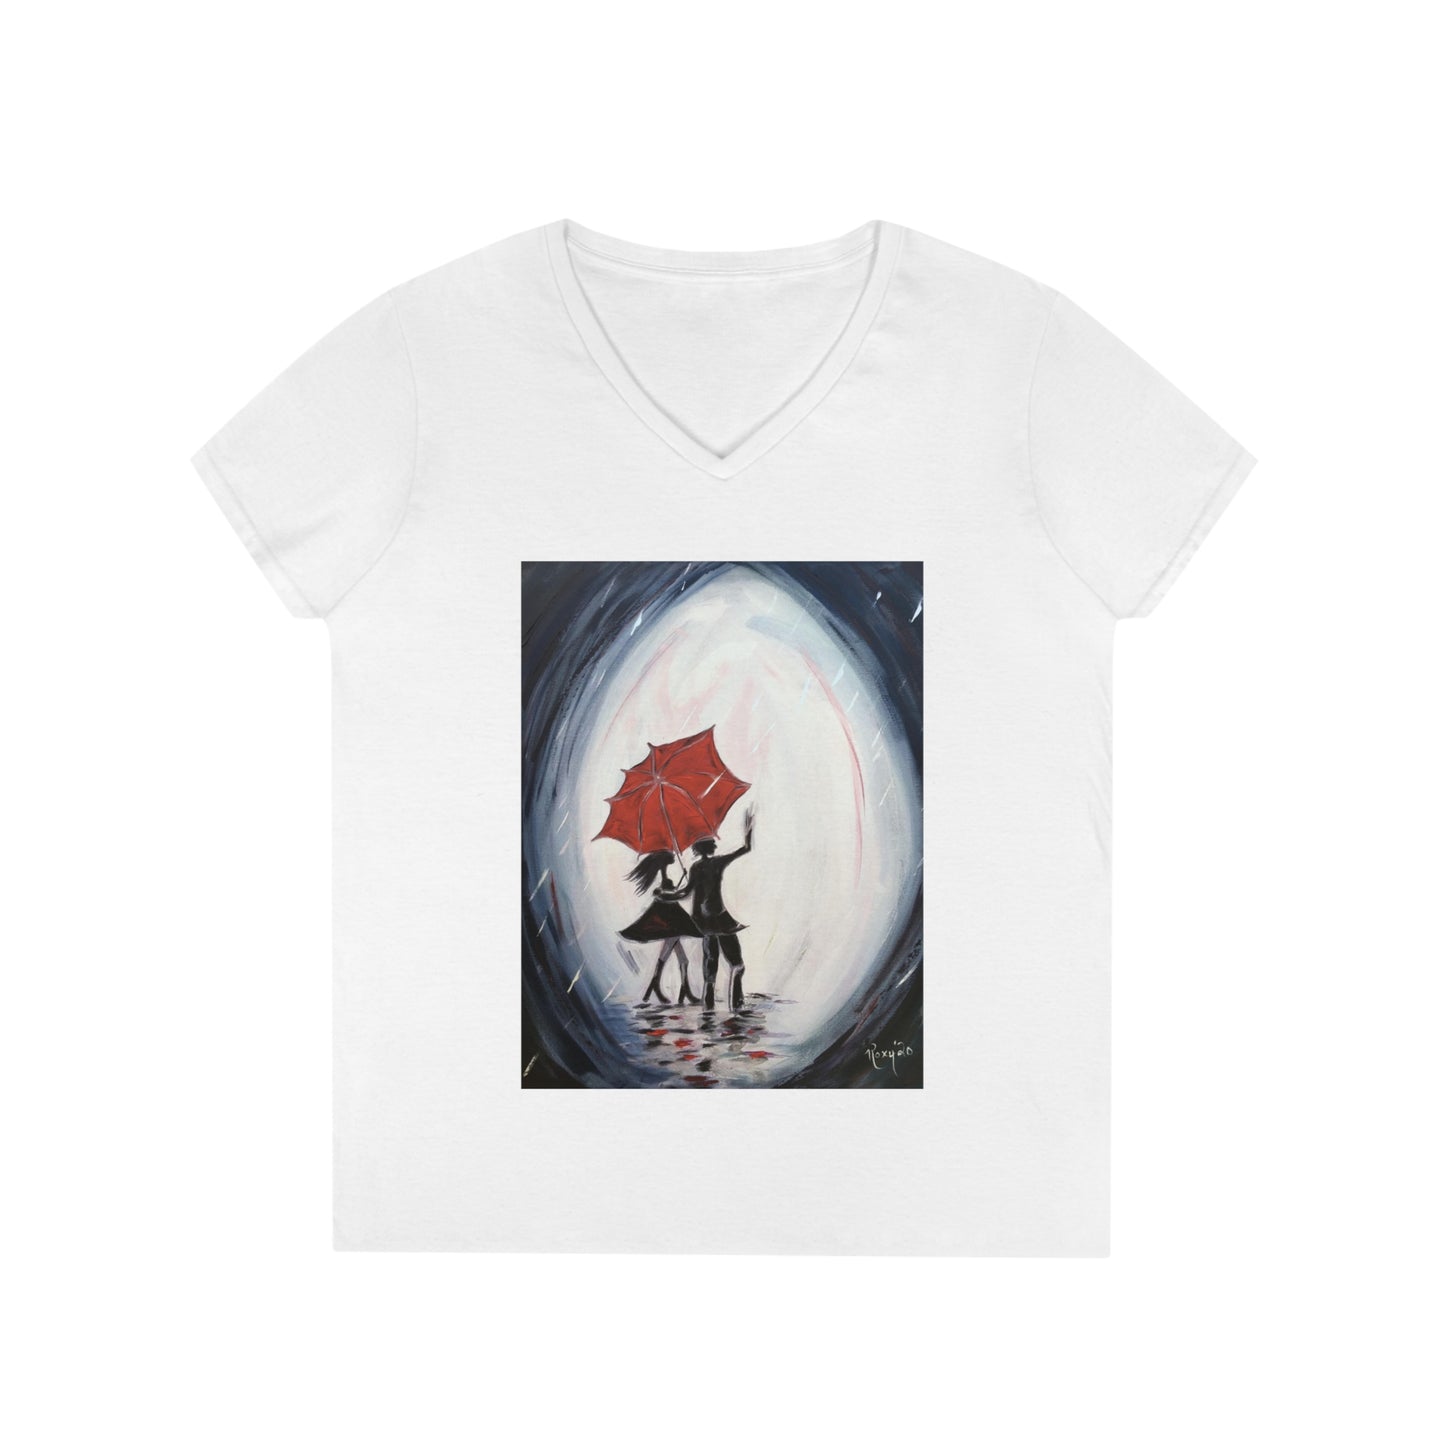 Romantic Couple in Paris "Walking in the Rain" Ladies' V-Neck T-Shirt